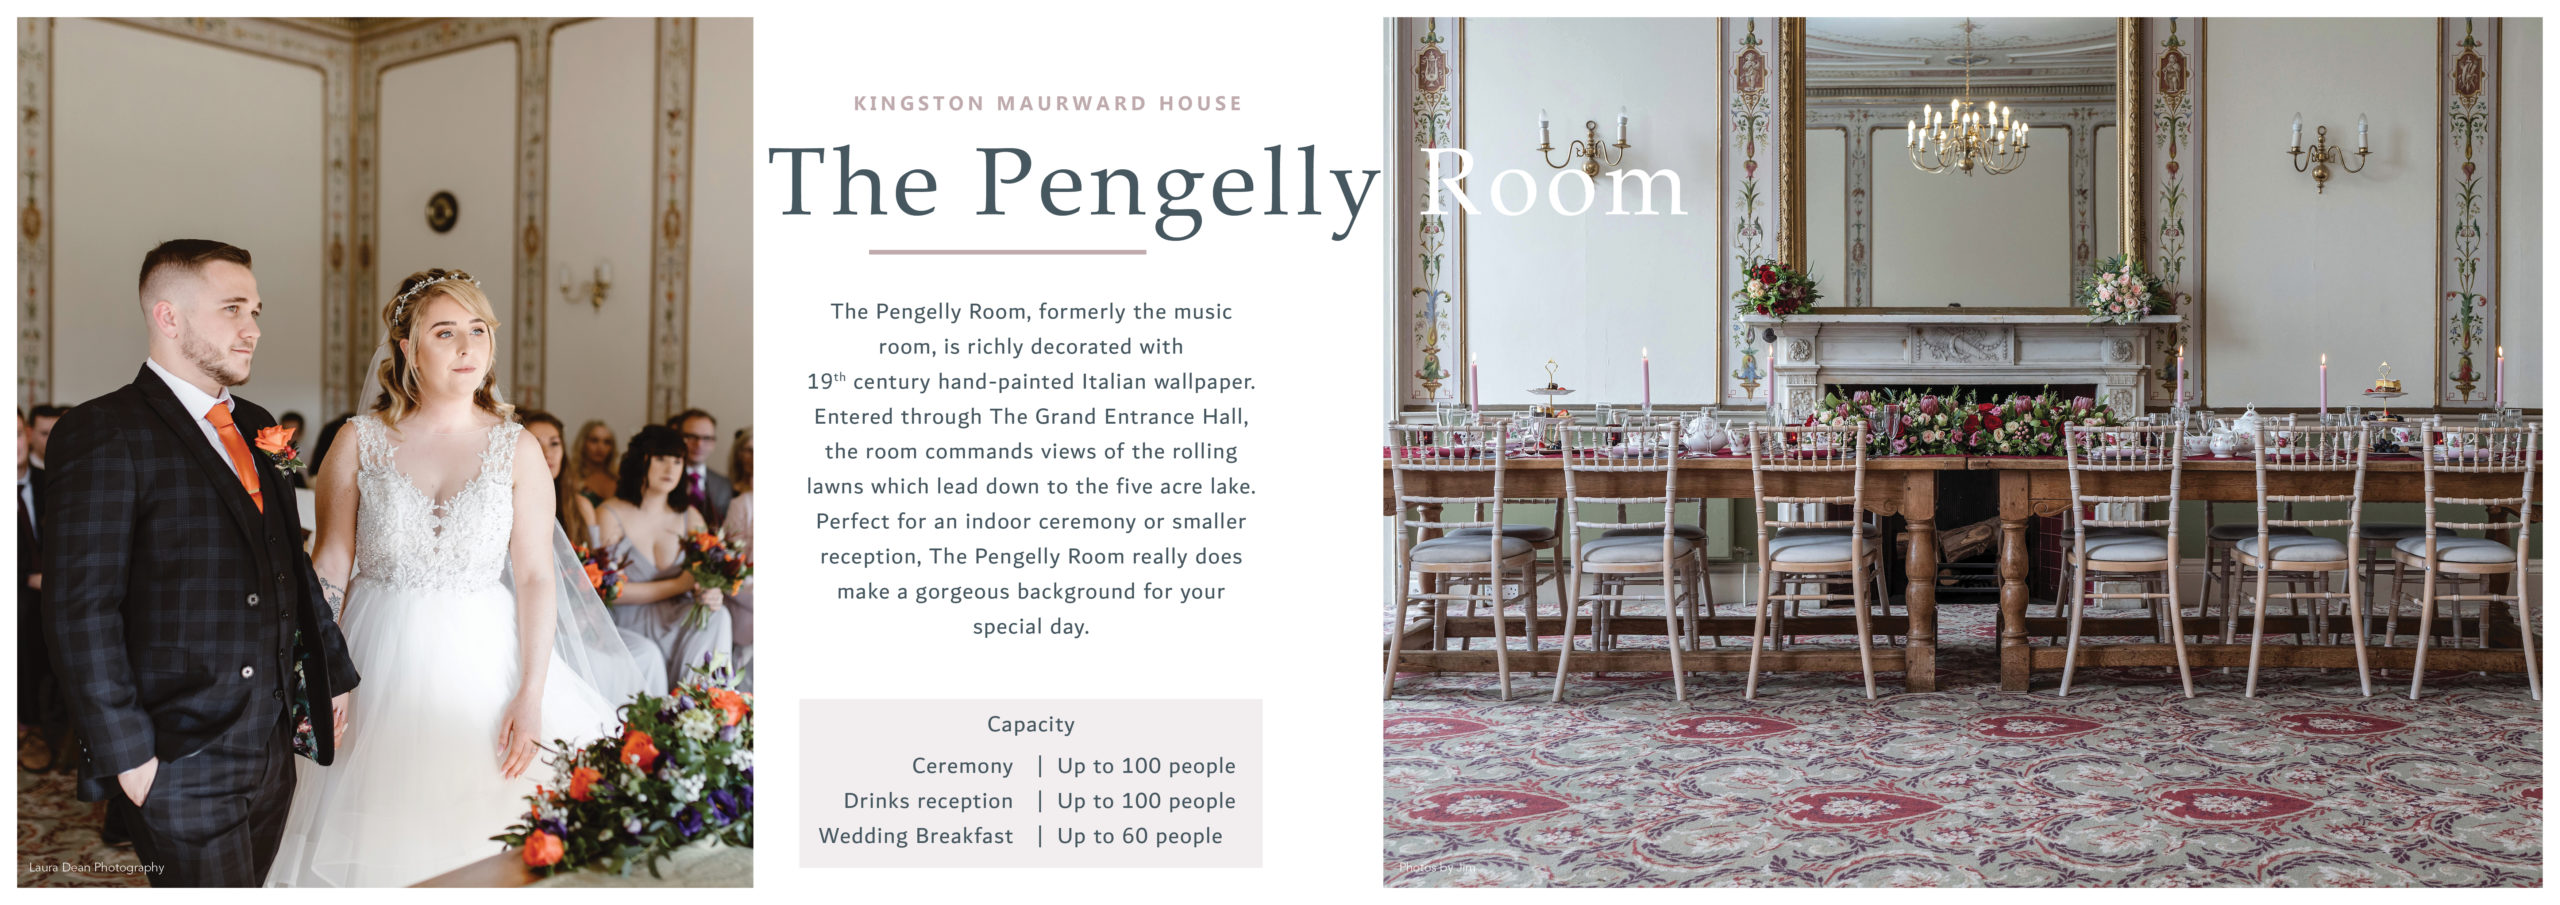 Pengelly Room brochure spreads